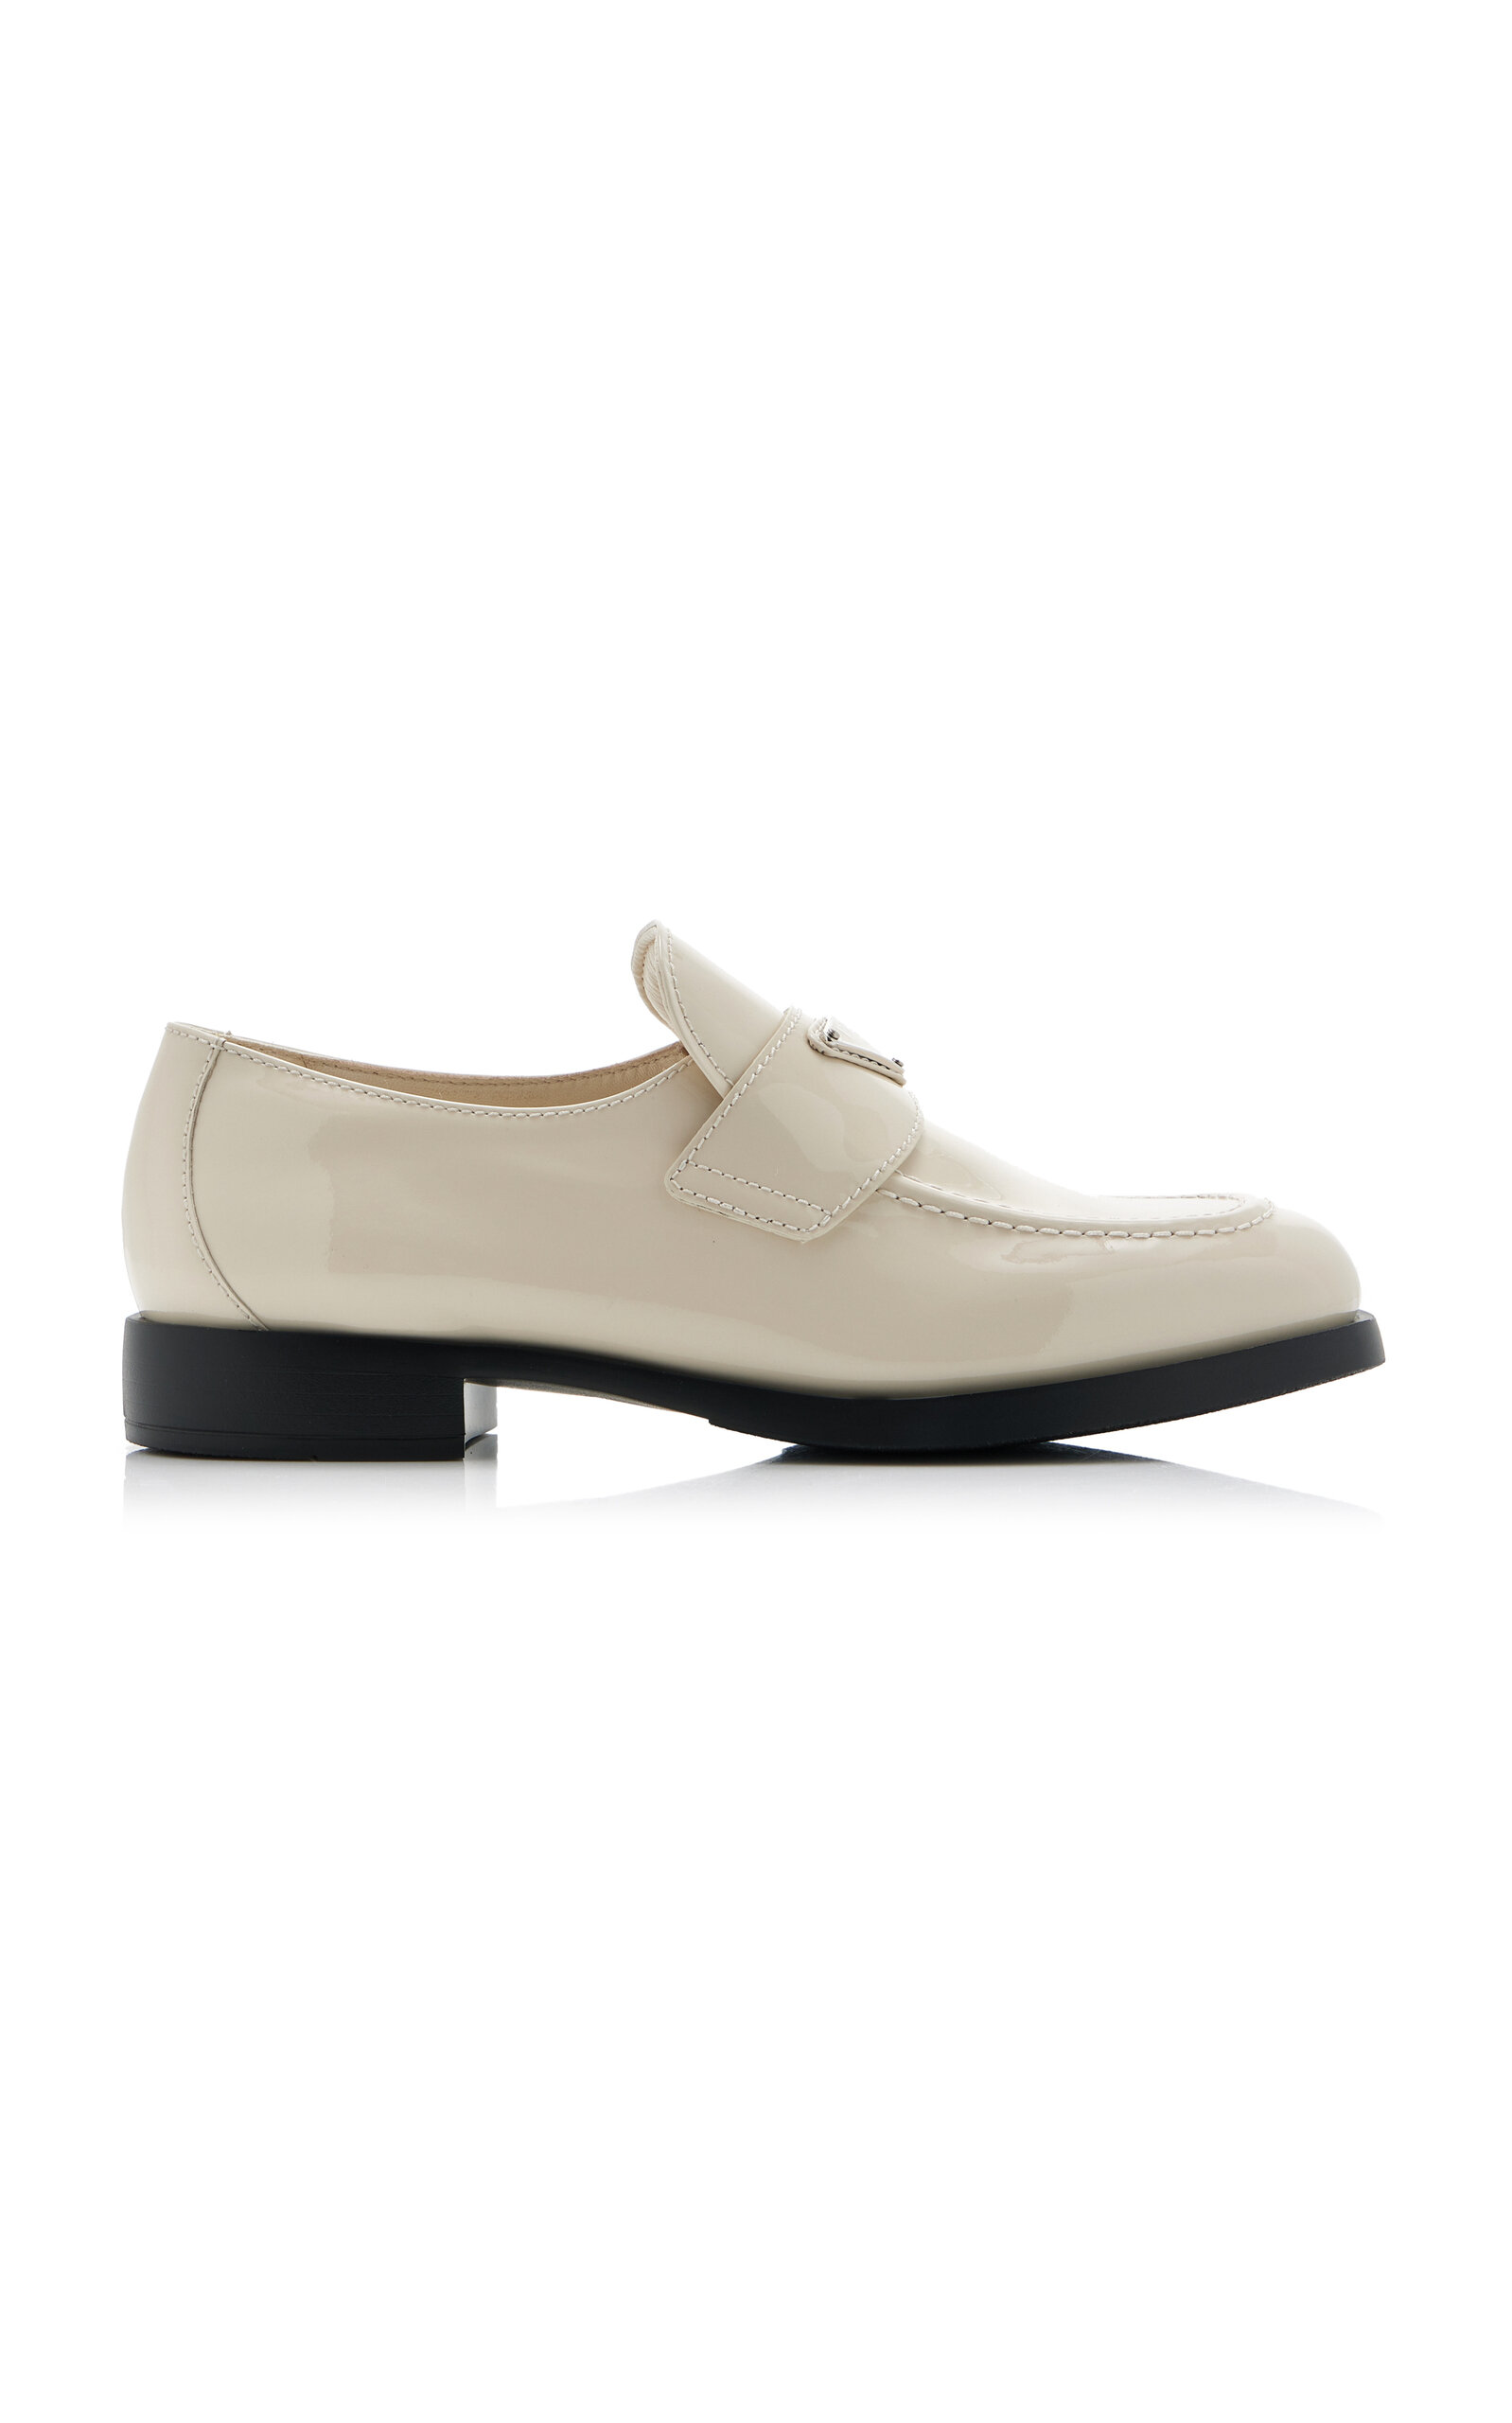 Prada - Women's Patent Leather Loafers - Ivory - IT 36 - Moda Operandi